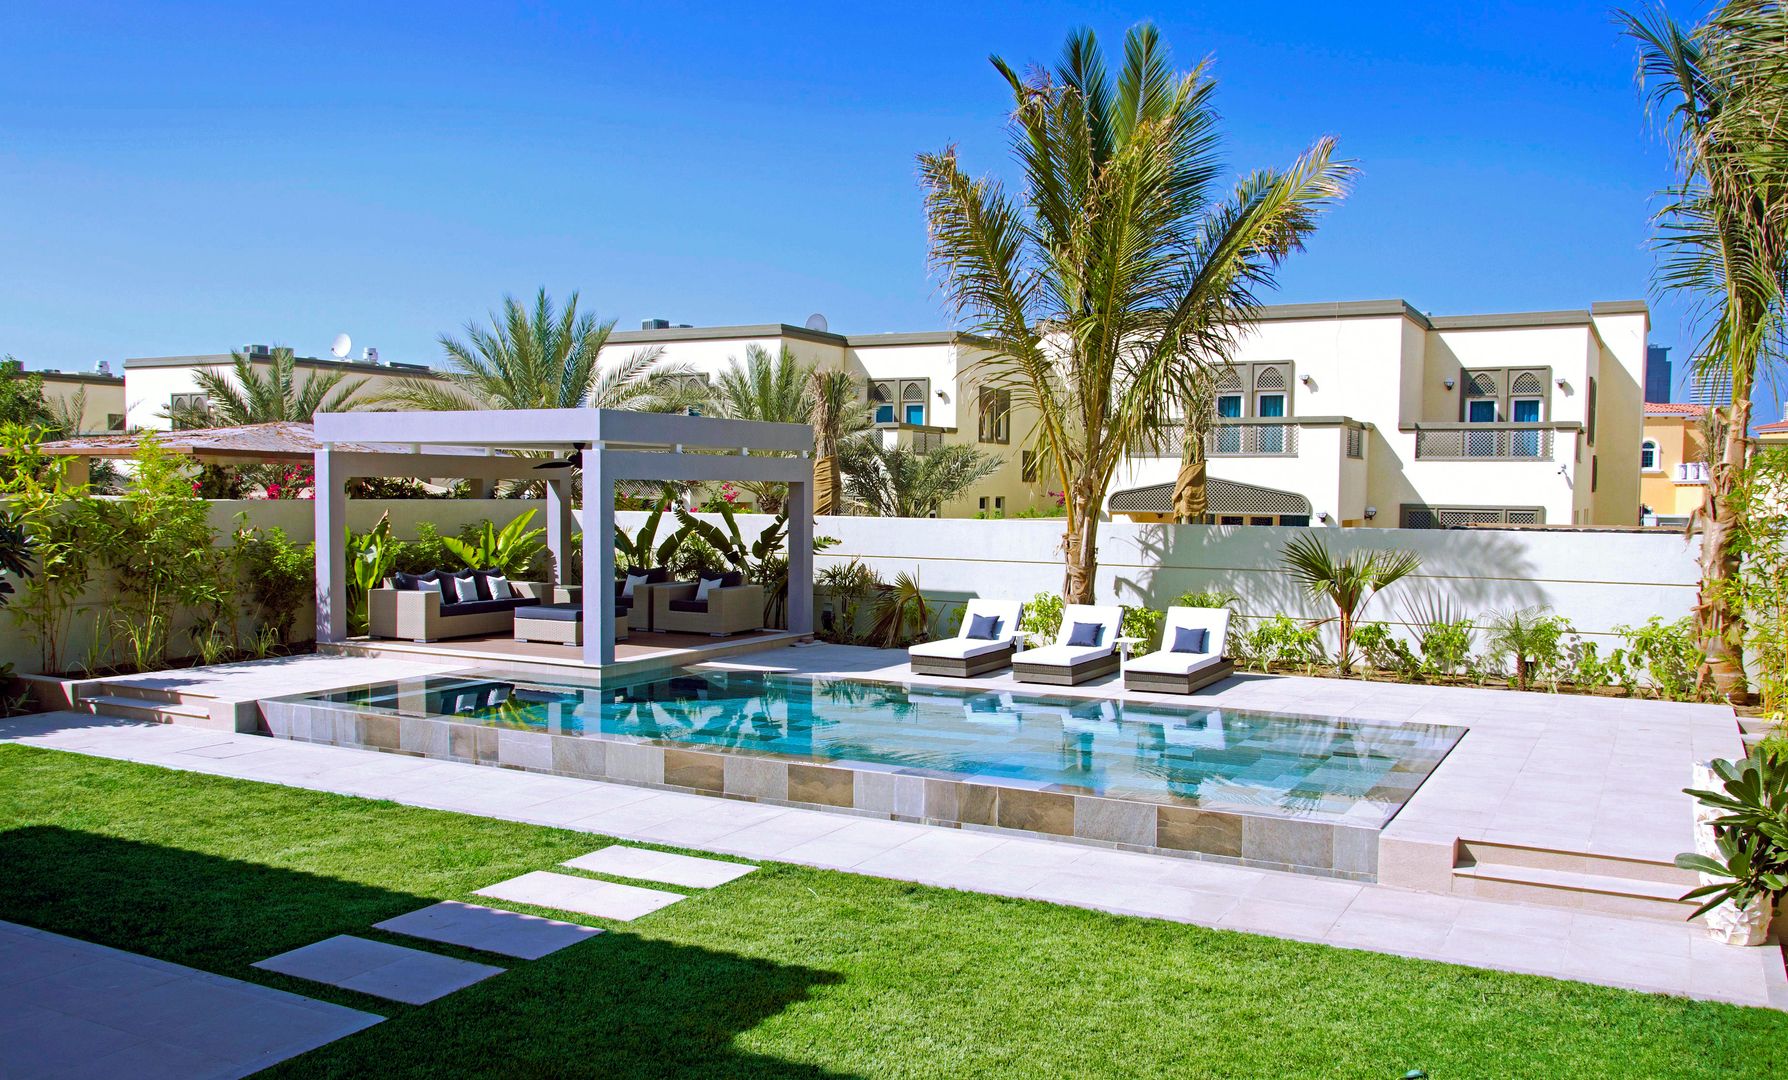 Infinity pool in Italian porcelain tiles Xterior Landscaping and Pools Nowoczesny basen swimming pool Dubai,landscape,design